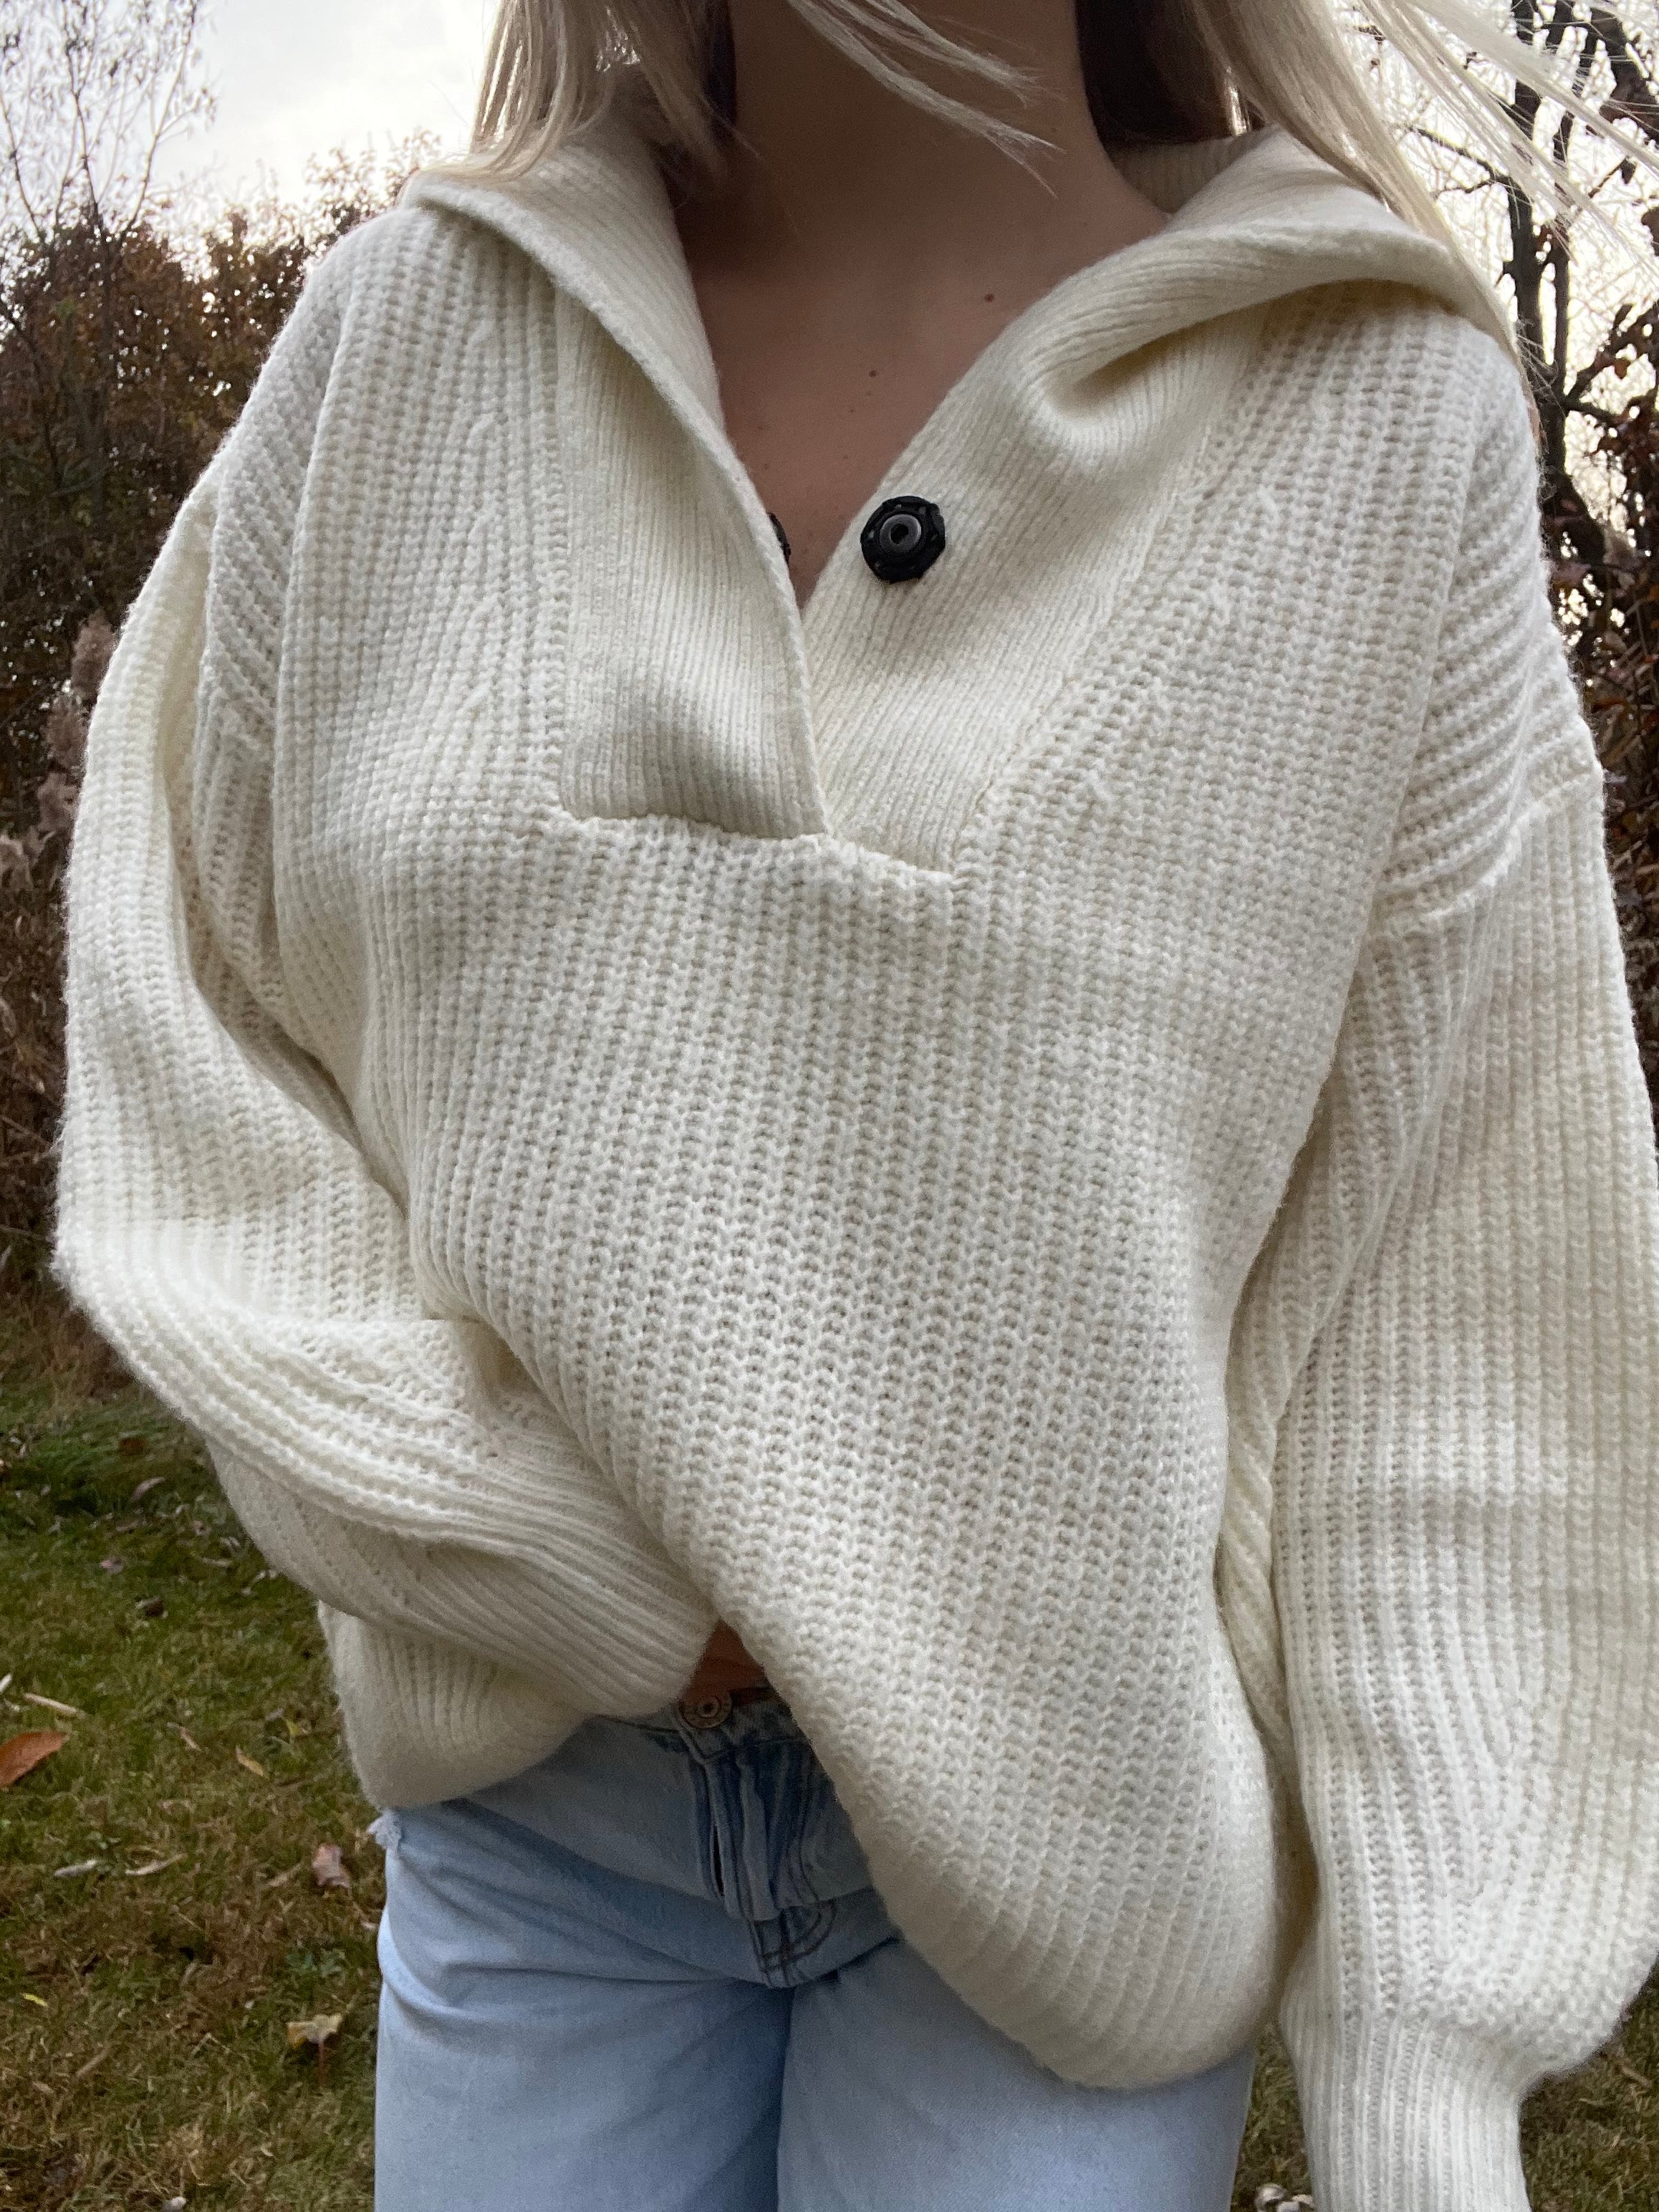 Aspen sweater